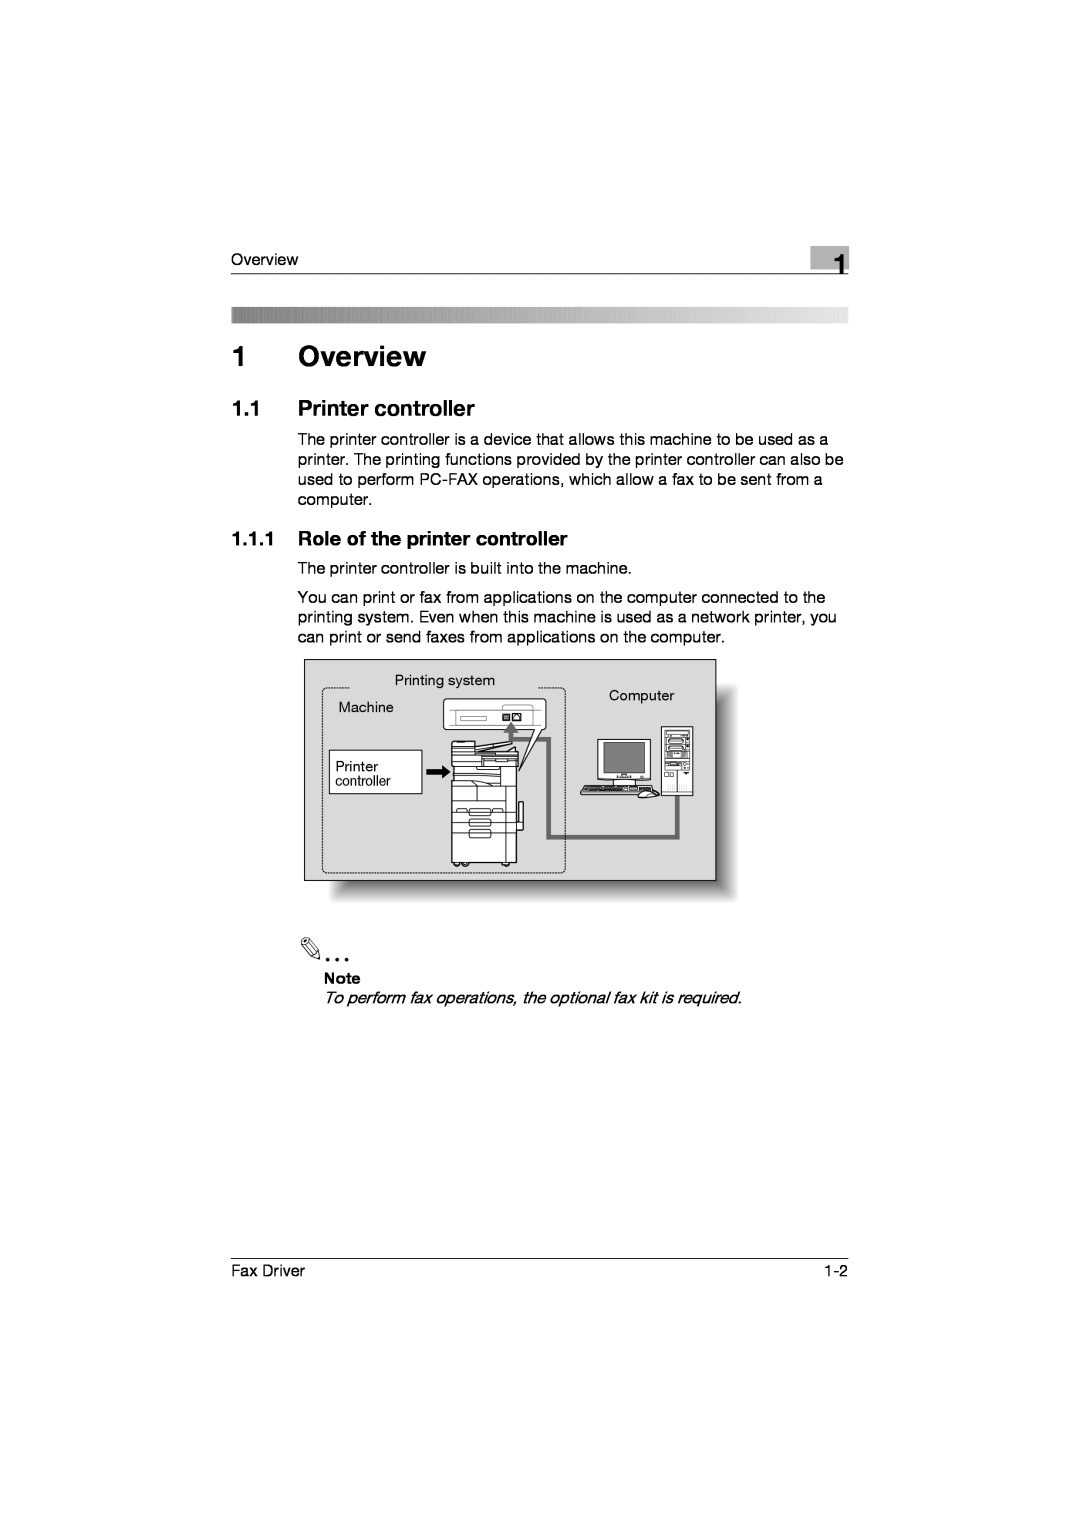 Konica Minolta 222, 282, 362 manual 1Overview, 1.1Printer controller, 1.1.1Role of the printer controller 